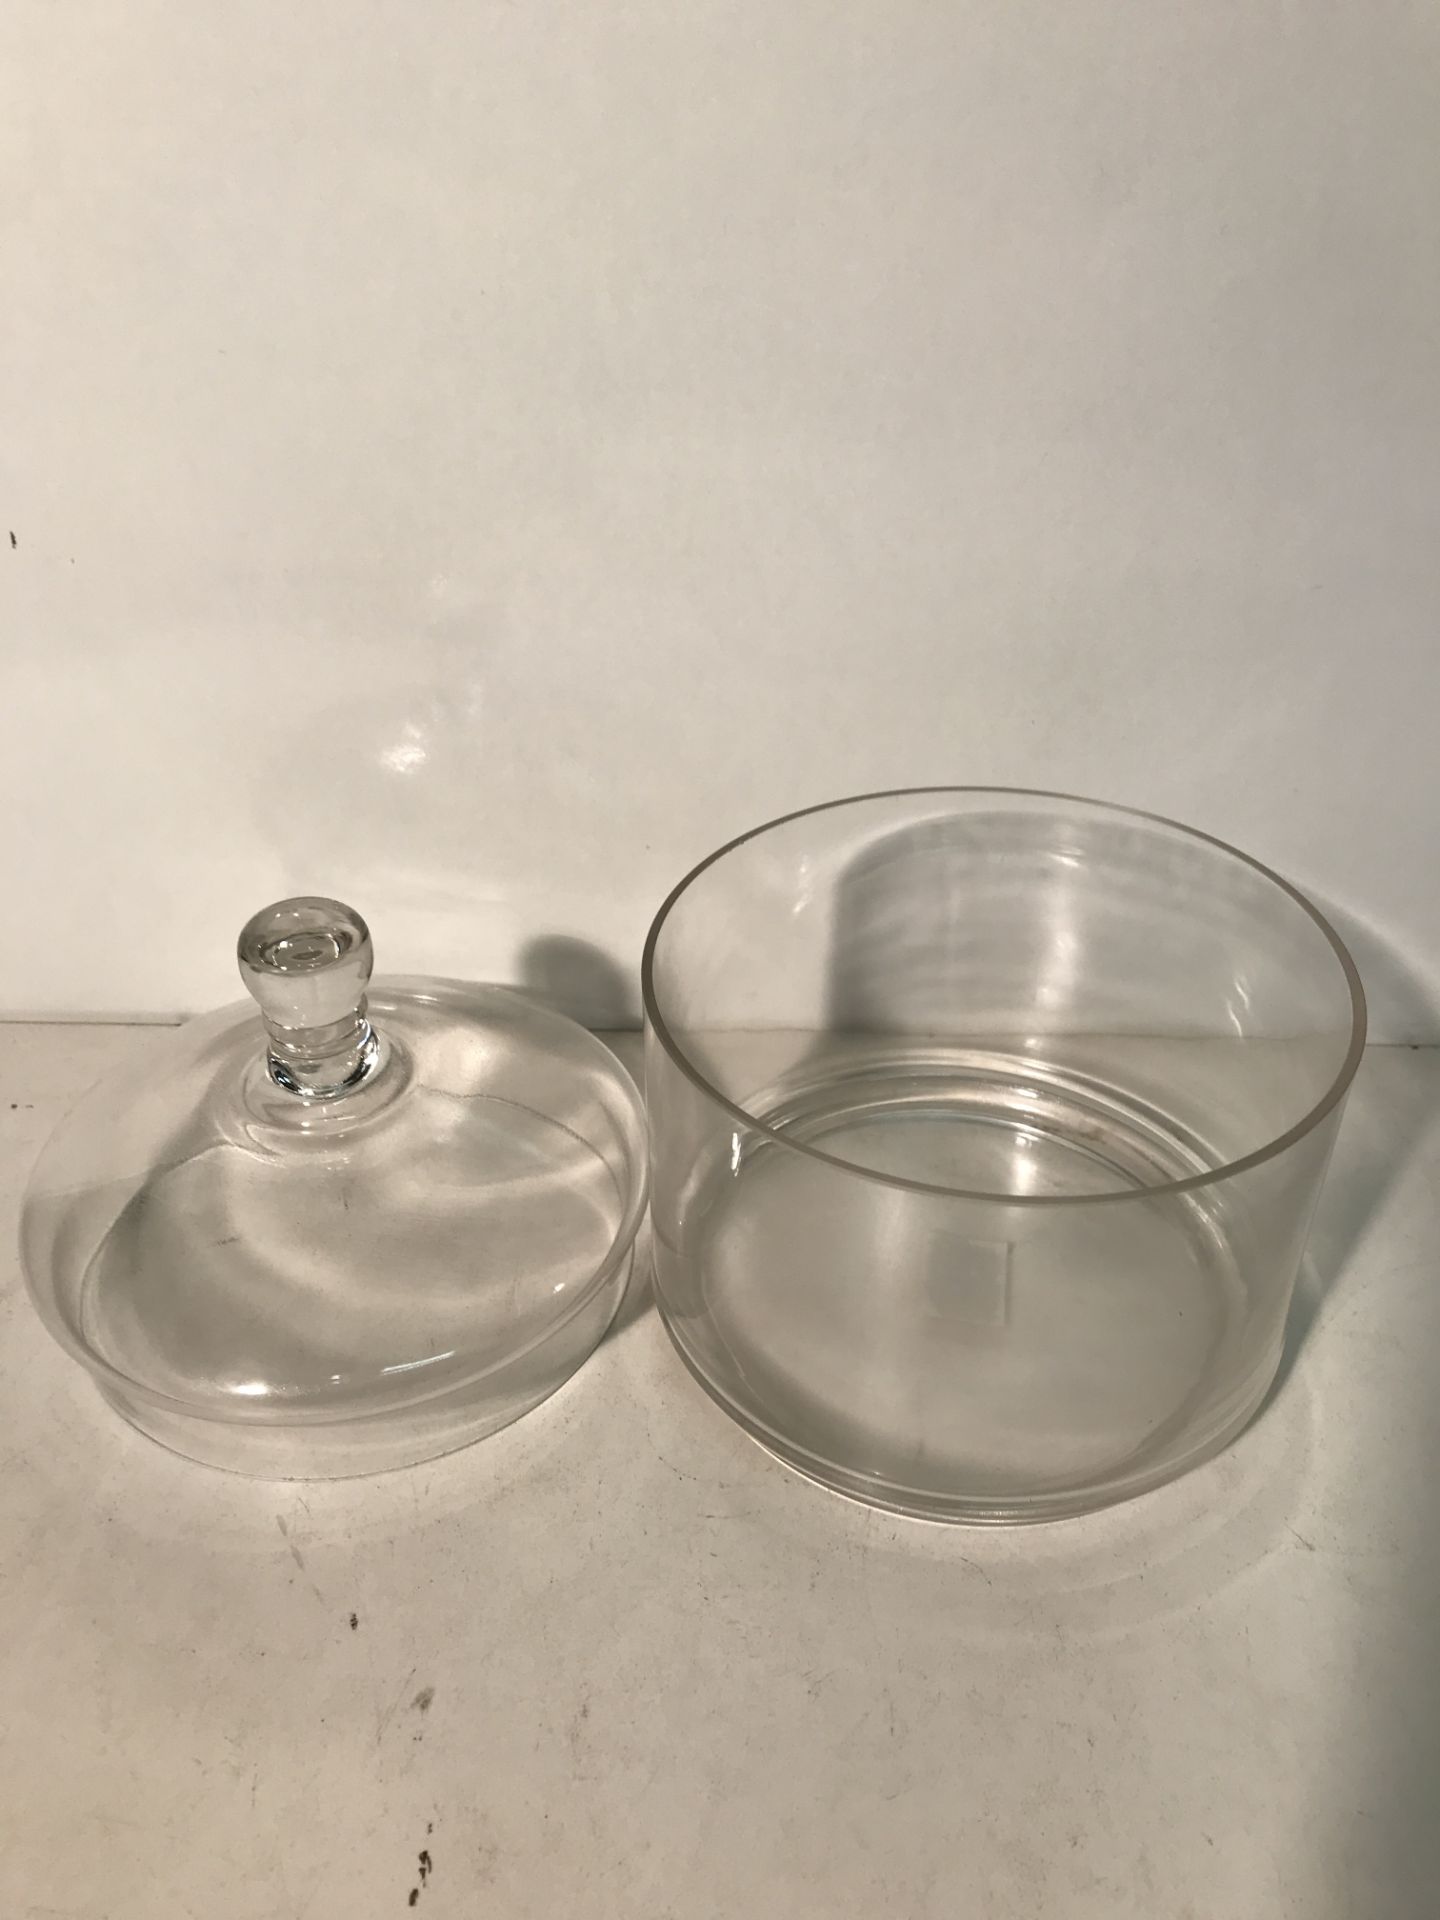 8 x Glass Bonbon Jars with Lids - Image 2 of 3